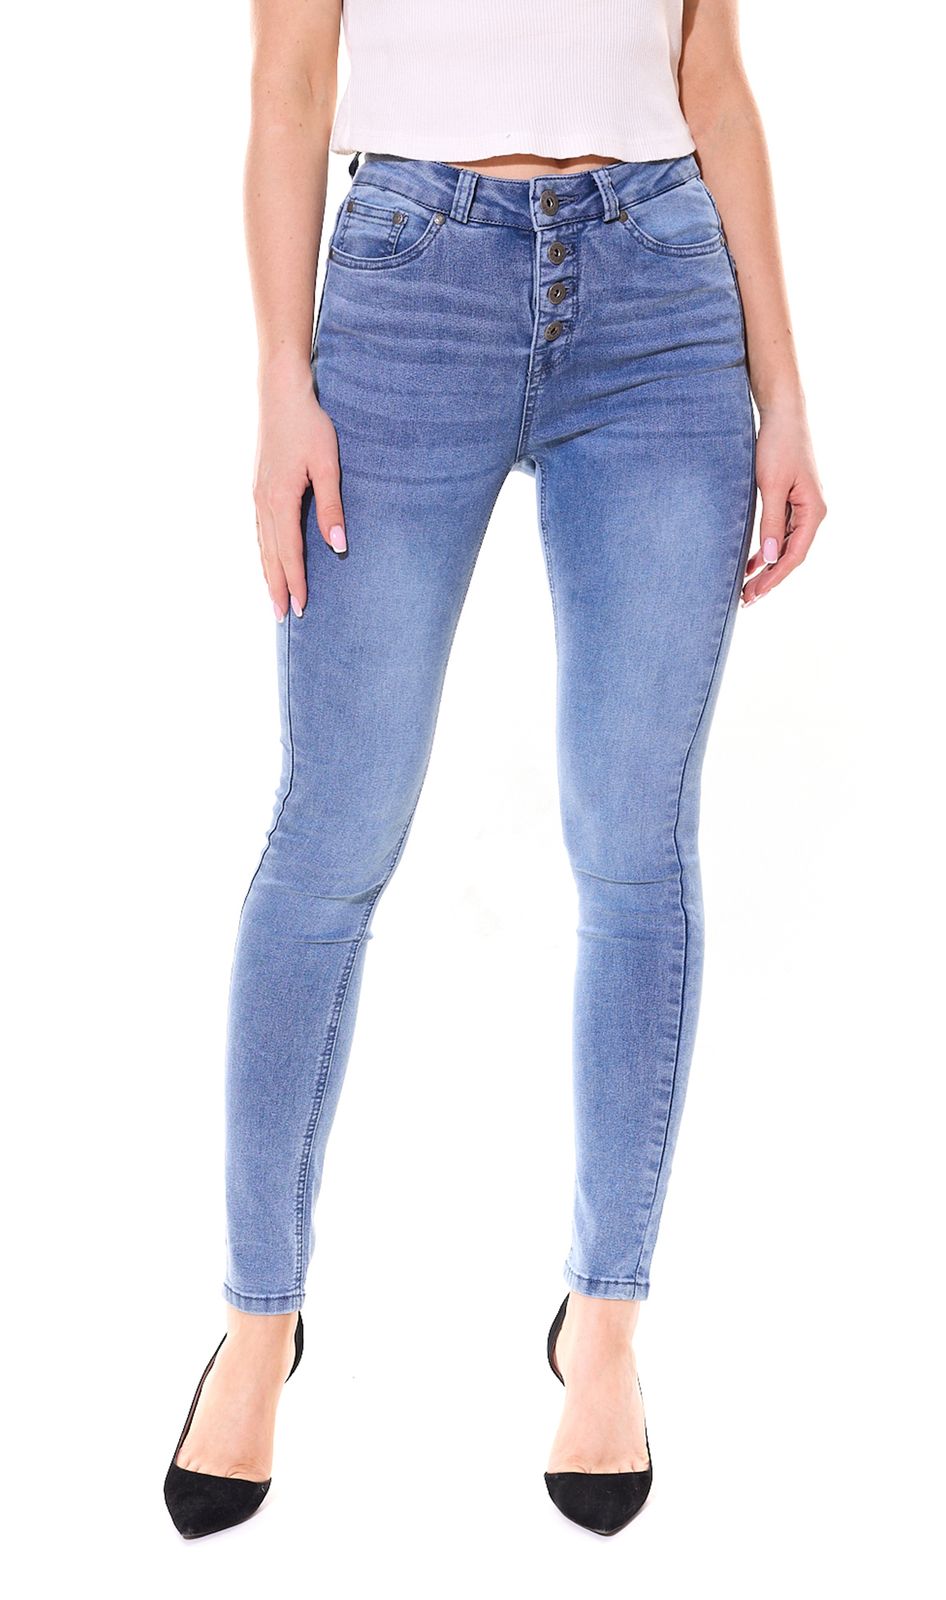 ARIZONA Ultraflex Röhren-Jeans Damen Hose Slim-Fit 5-Pocket 36492606 Blau von ARIZONA